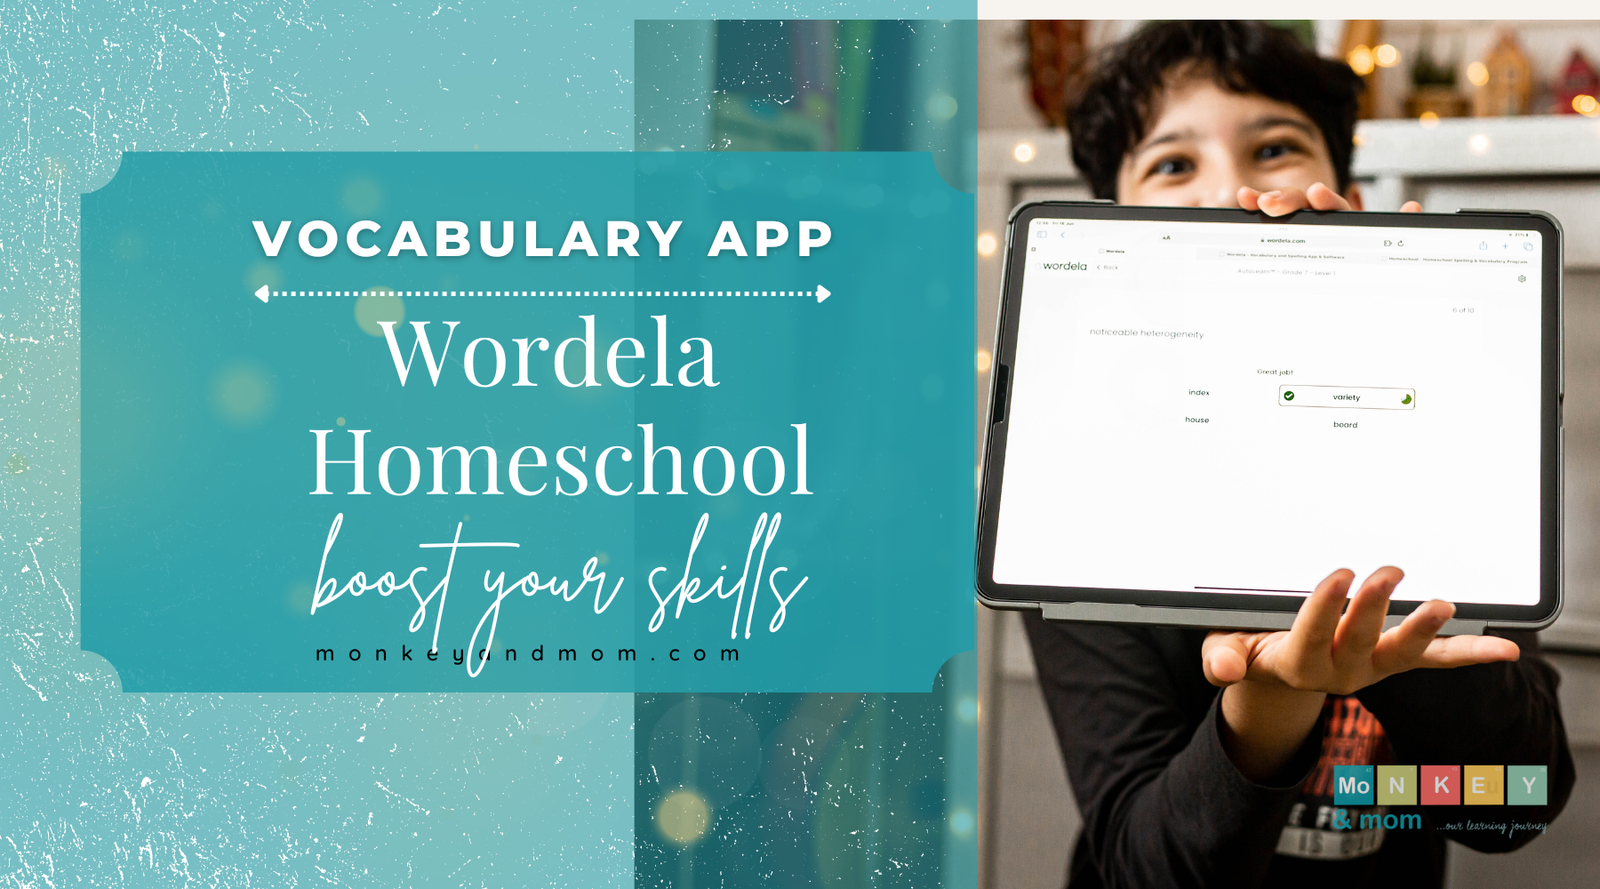 From Novice to Word Wizard! Wordela Homeschool Online Vocabulary App | Review